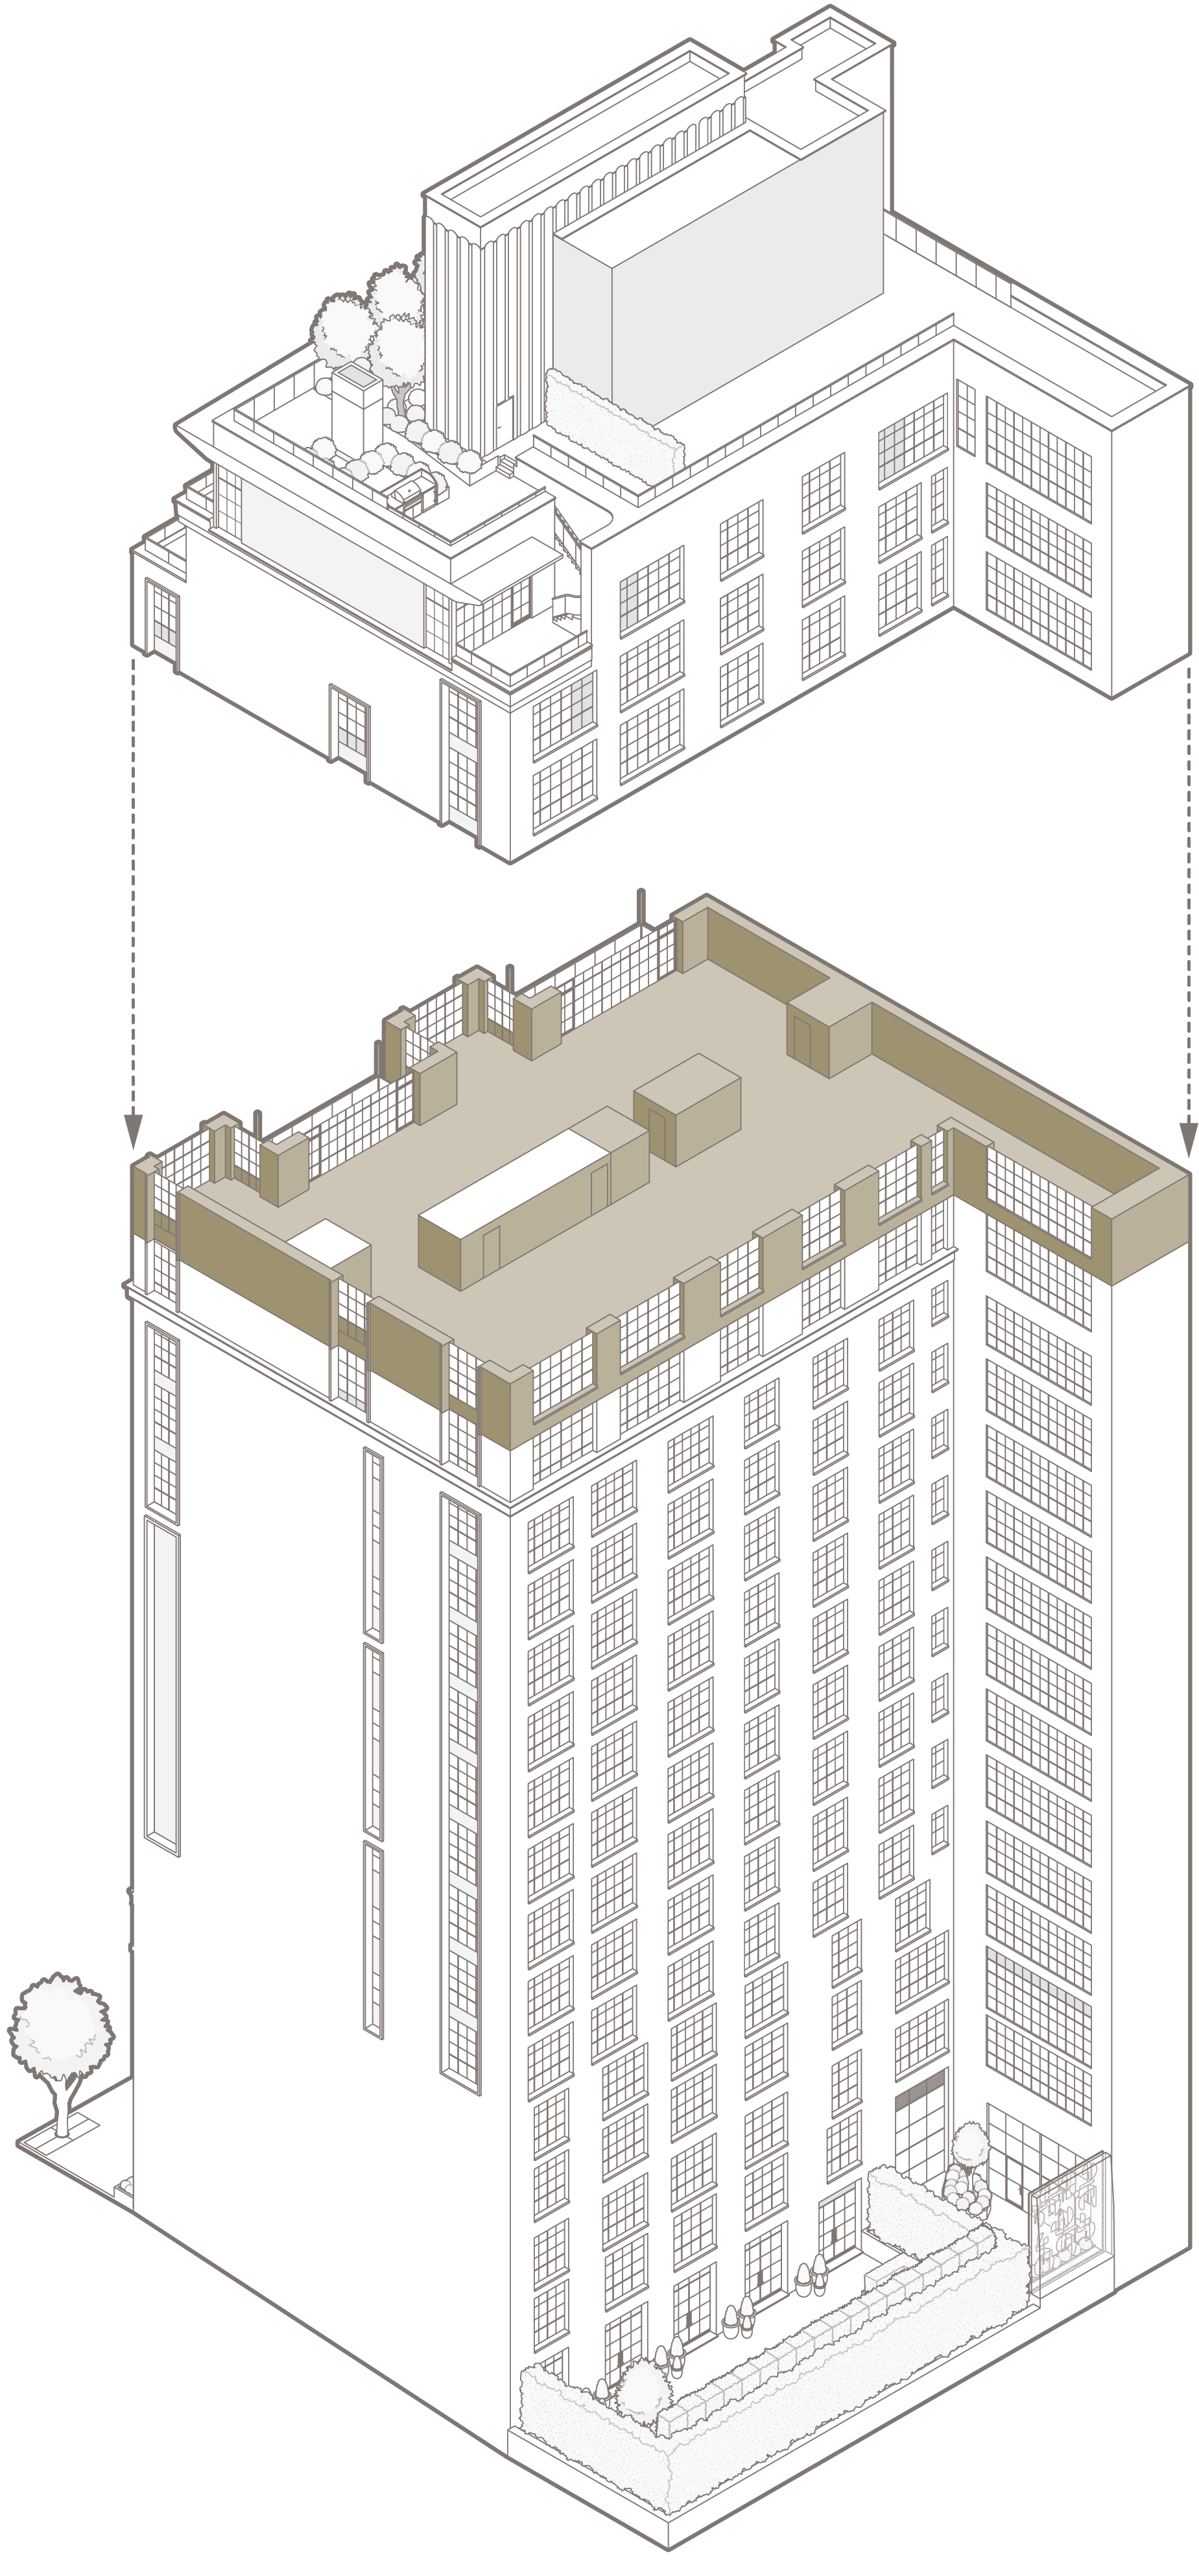 Penthouse 17 – North elevation